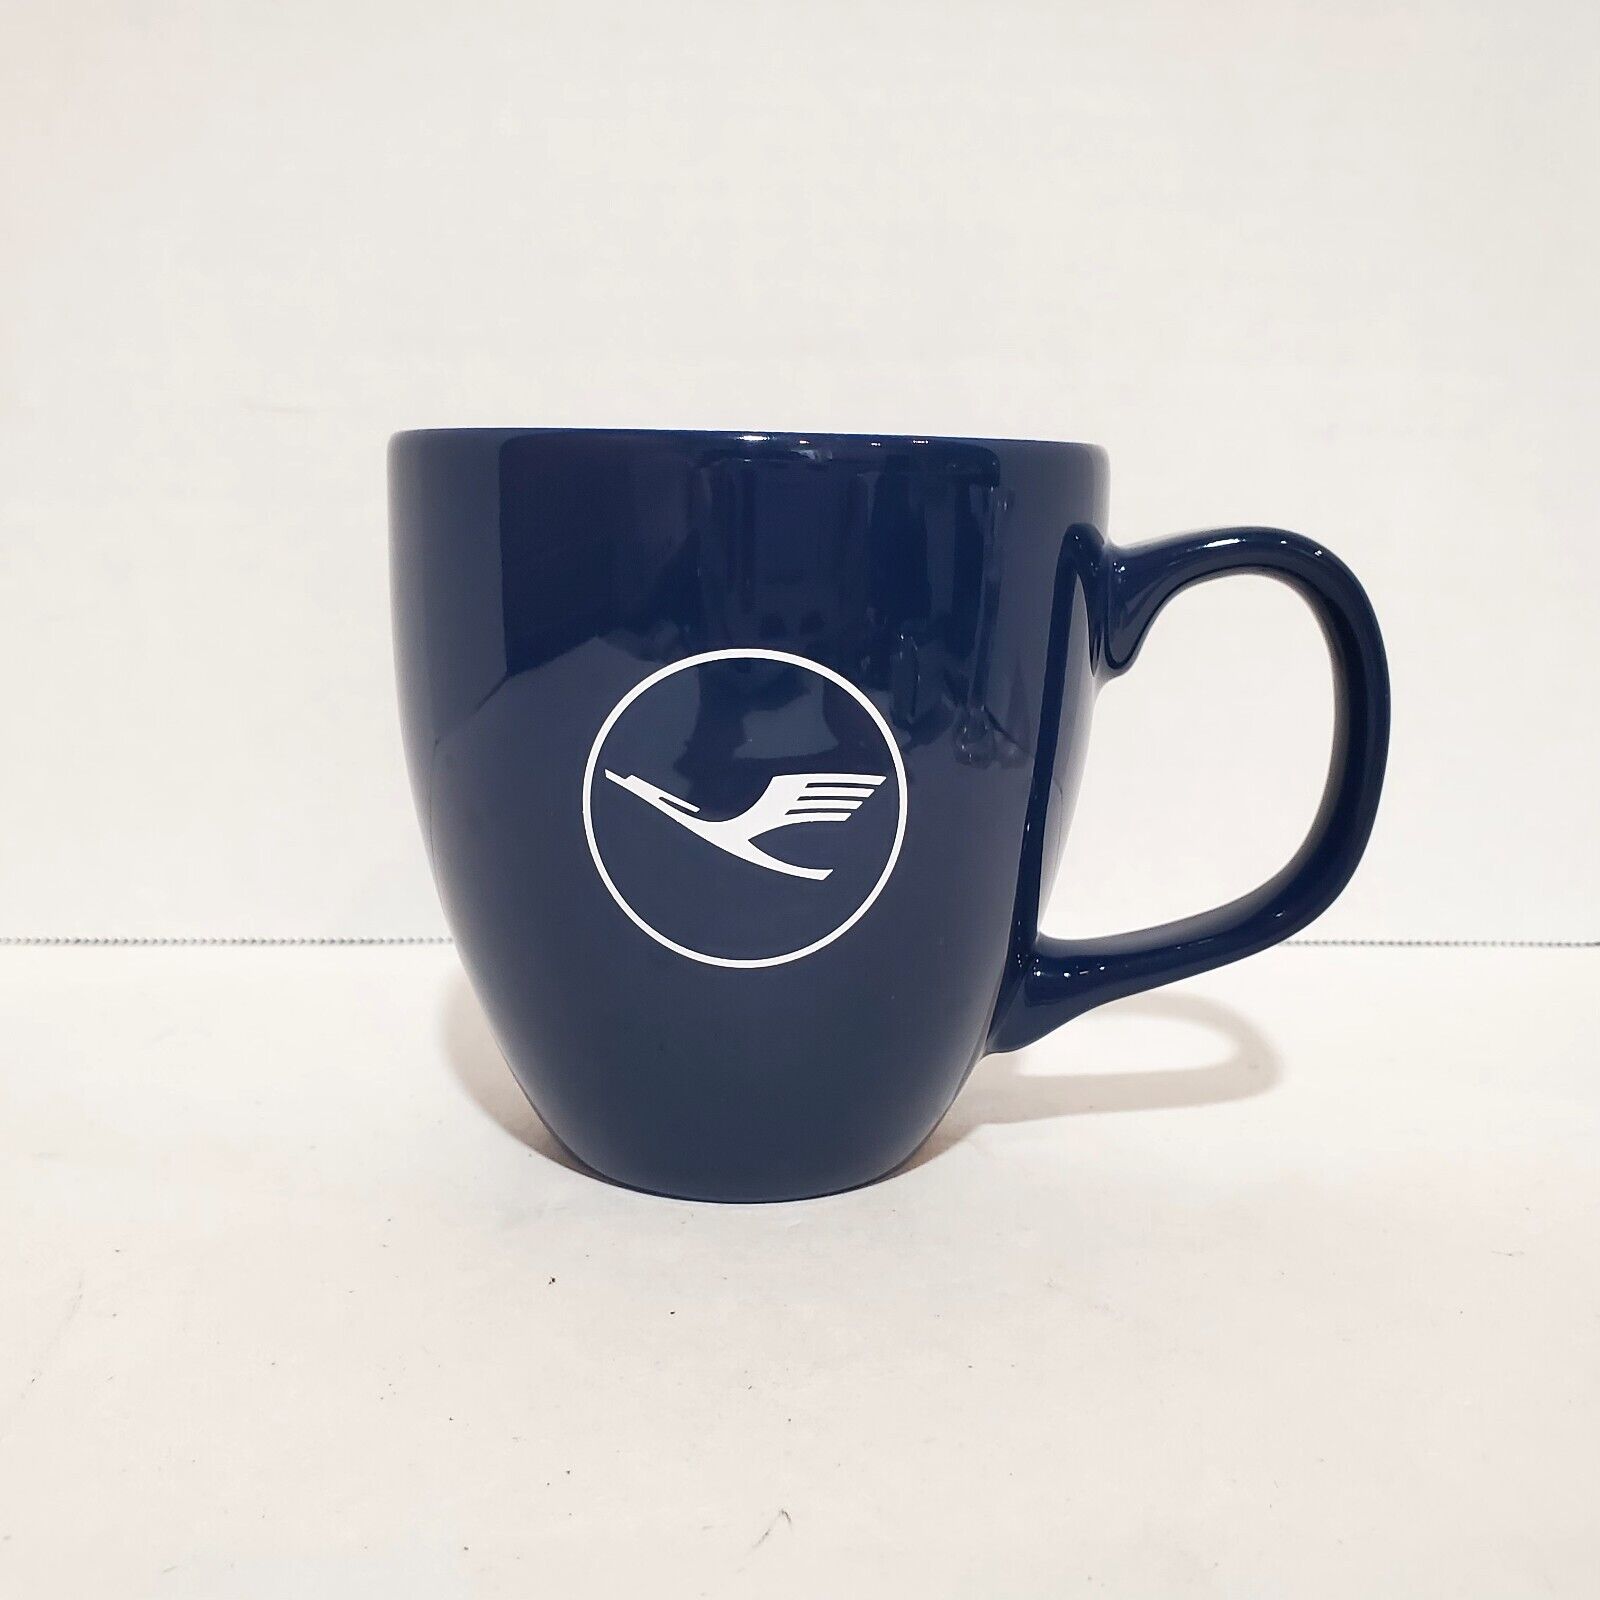 Deutsche Lufthansa Logo German Airline Souvenir Coffee Mug Tea Cup Blue